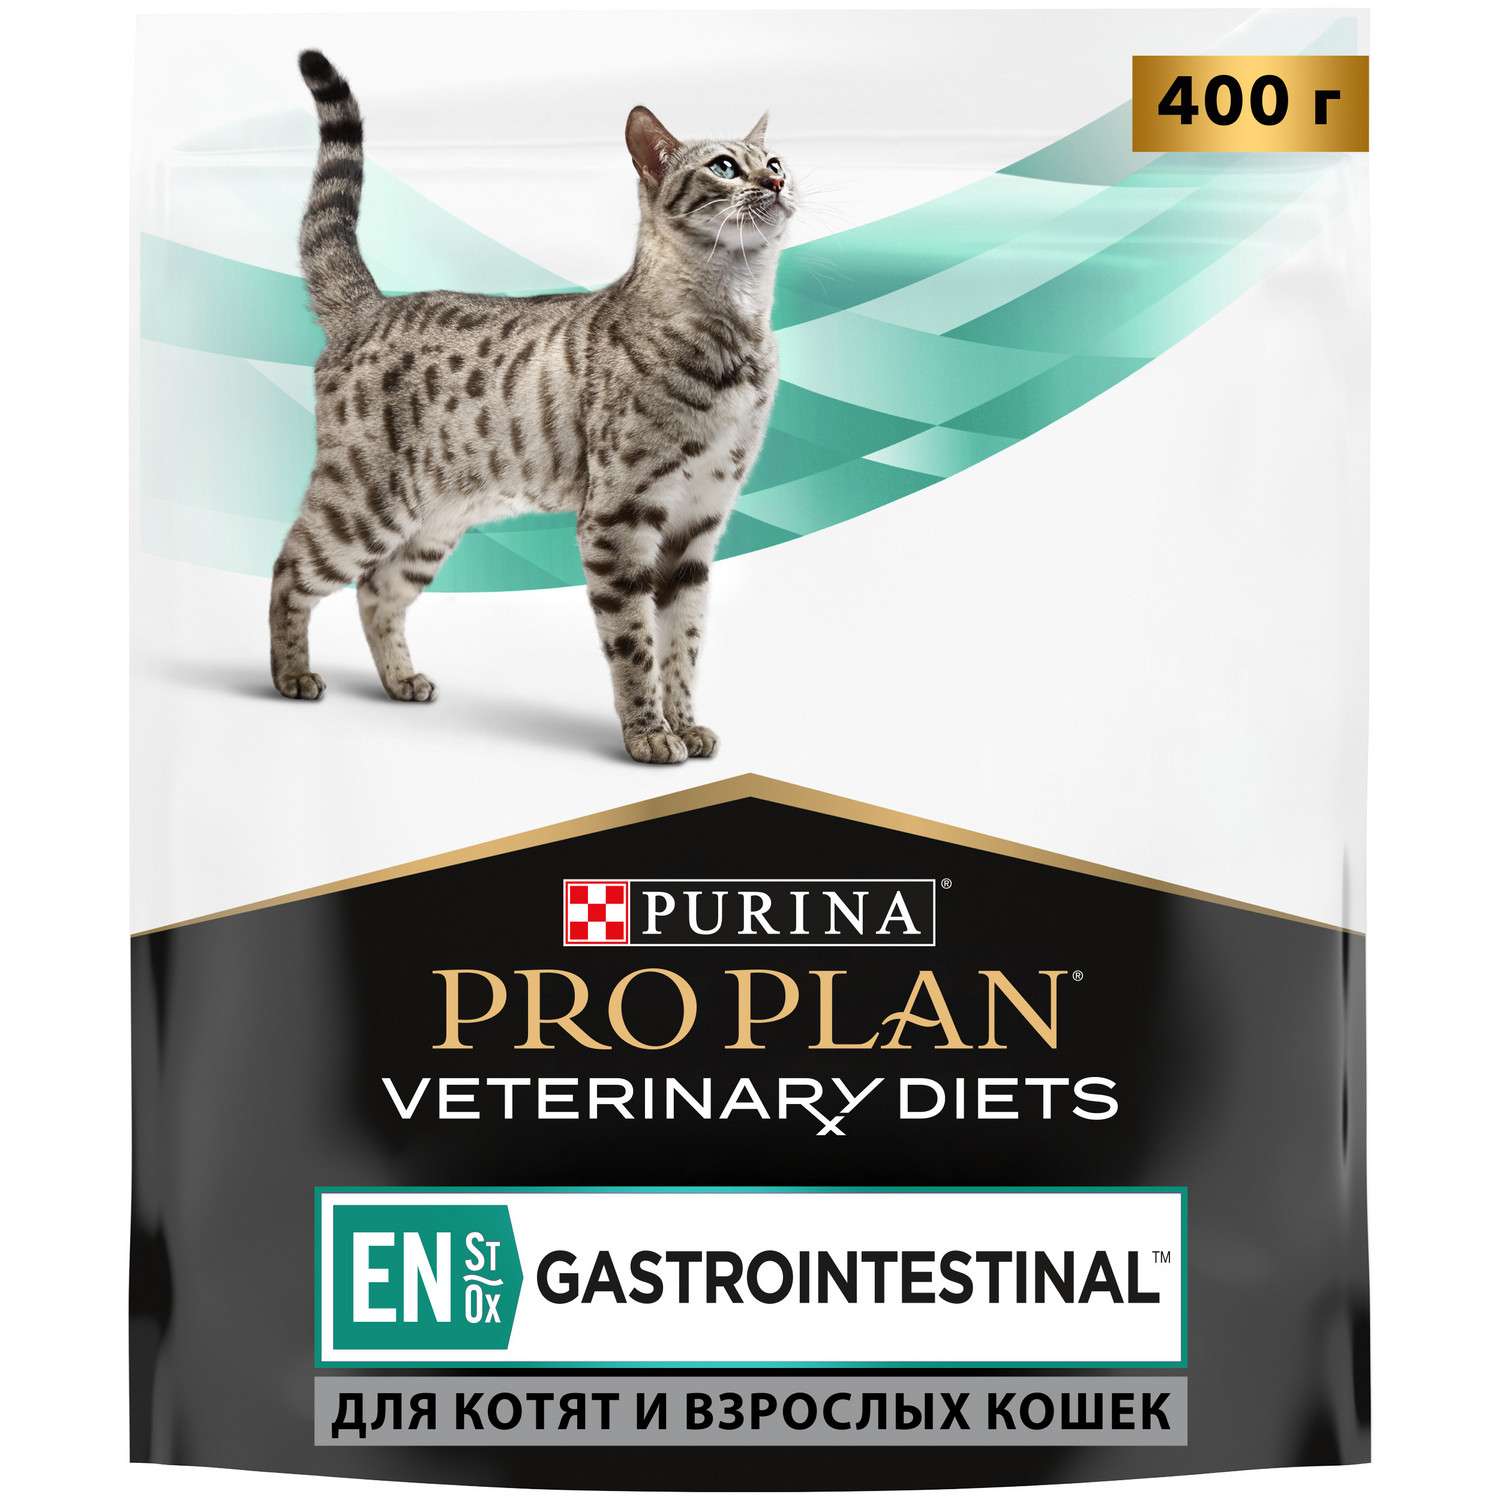 Корм для кошек Purina Pro Plan Veterinary diets ЕN при патологии ЖКТ 400г - фото 1